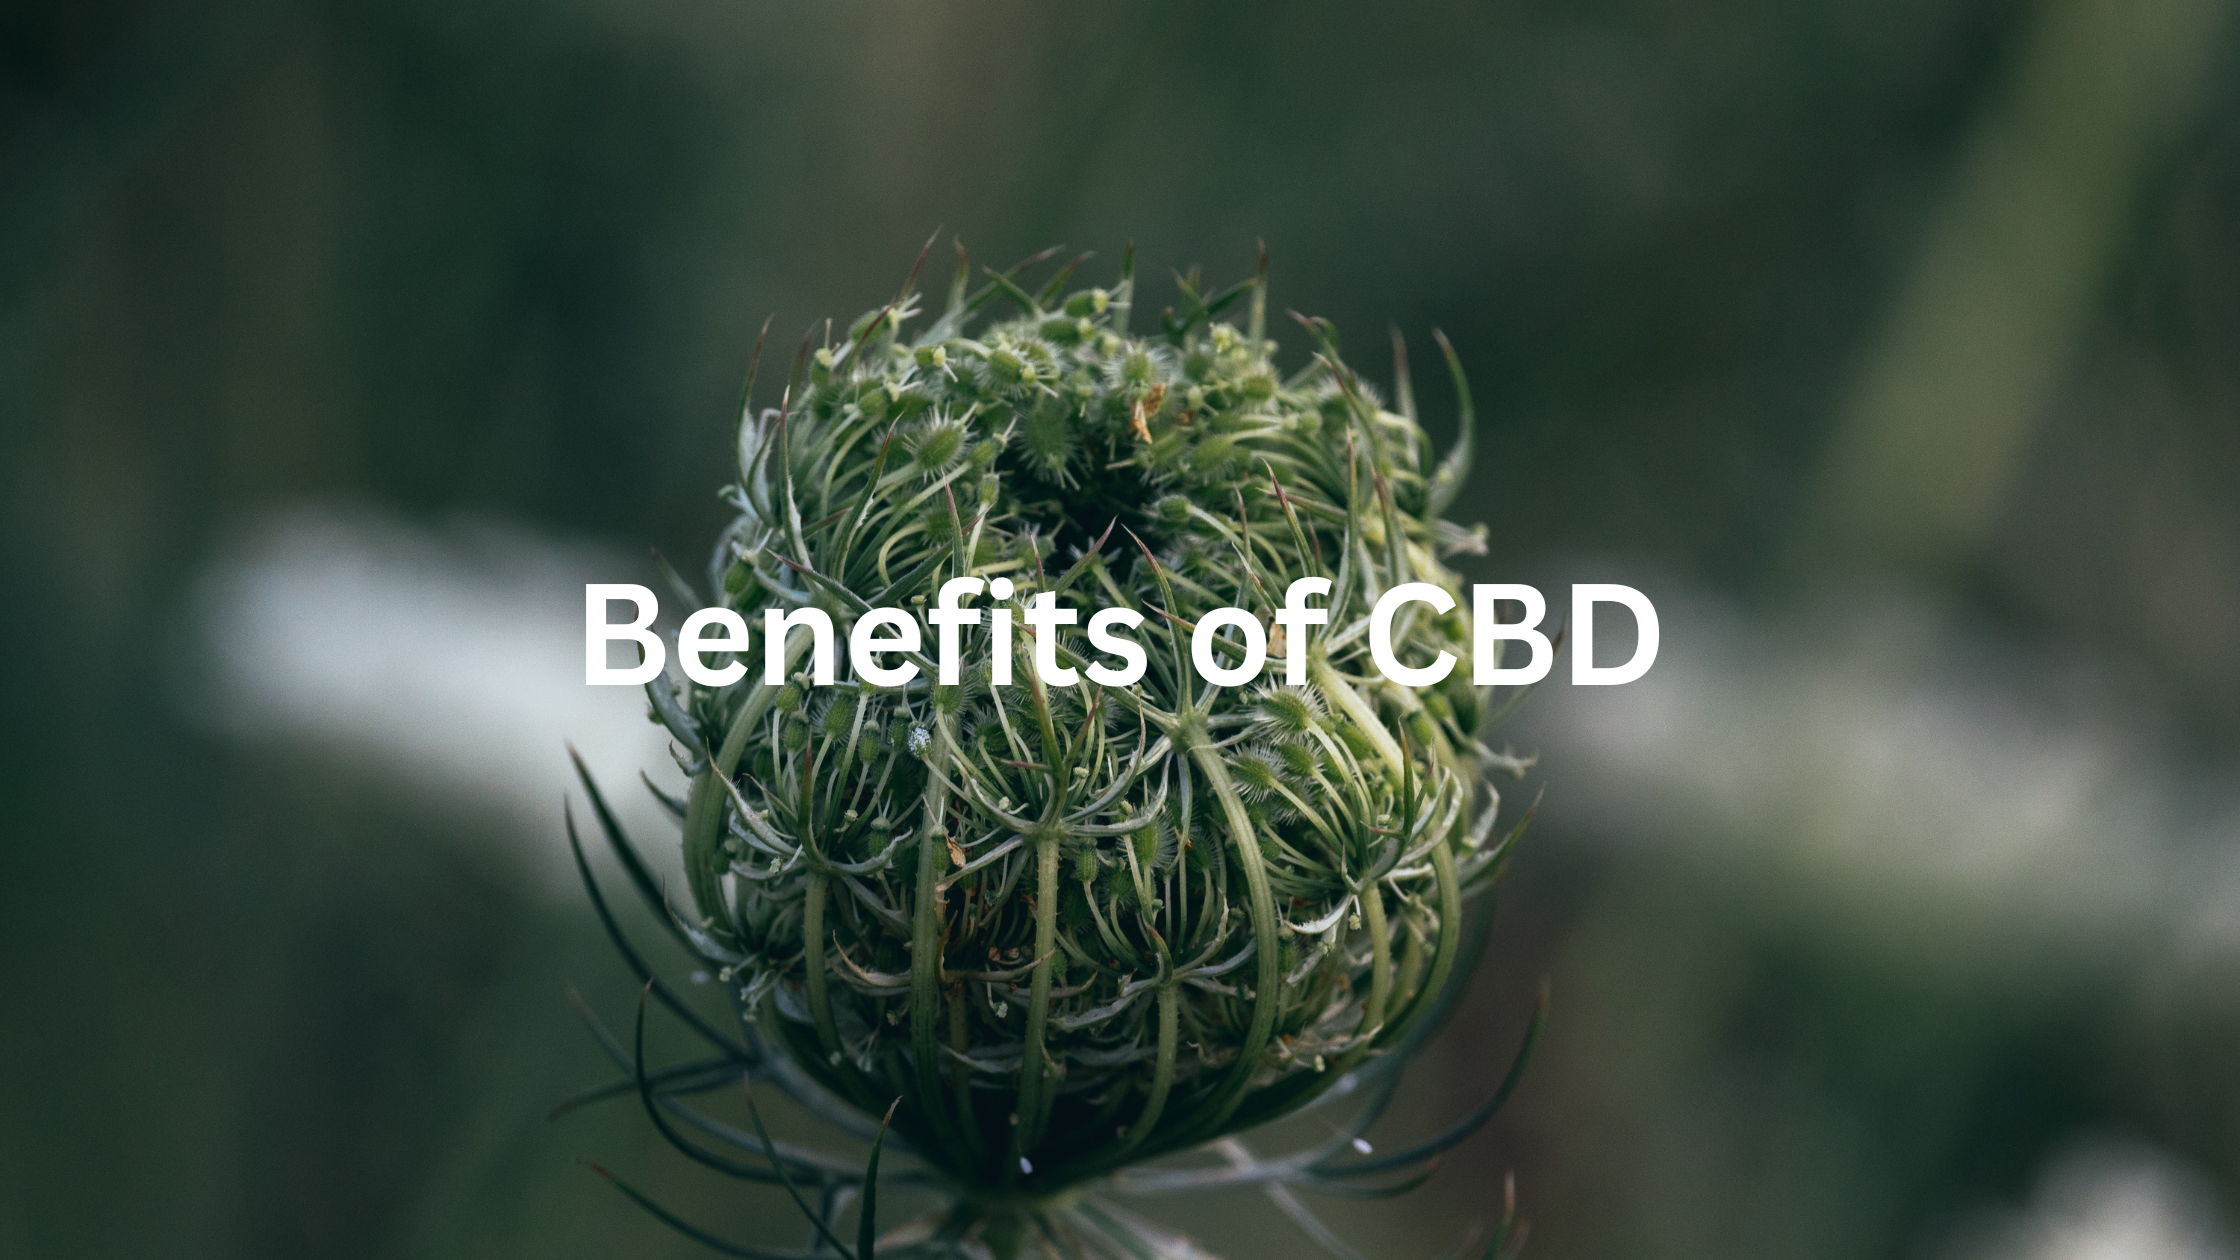 Benefits of CBD, Hemp